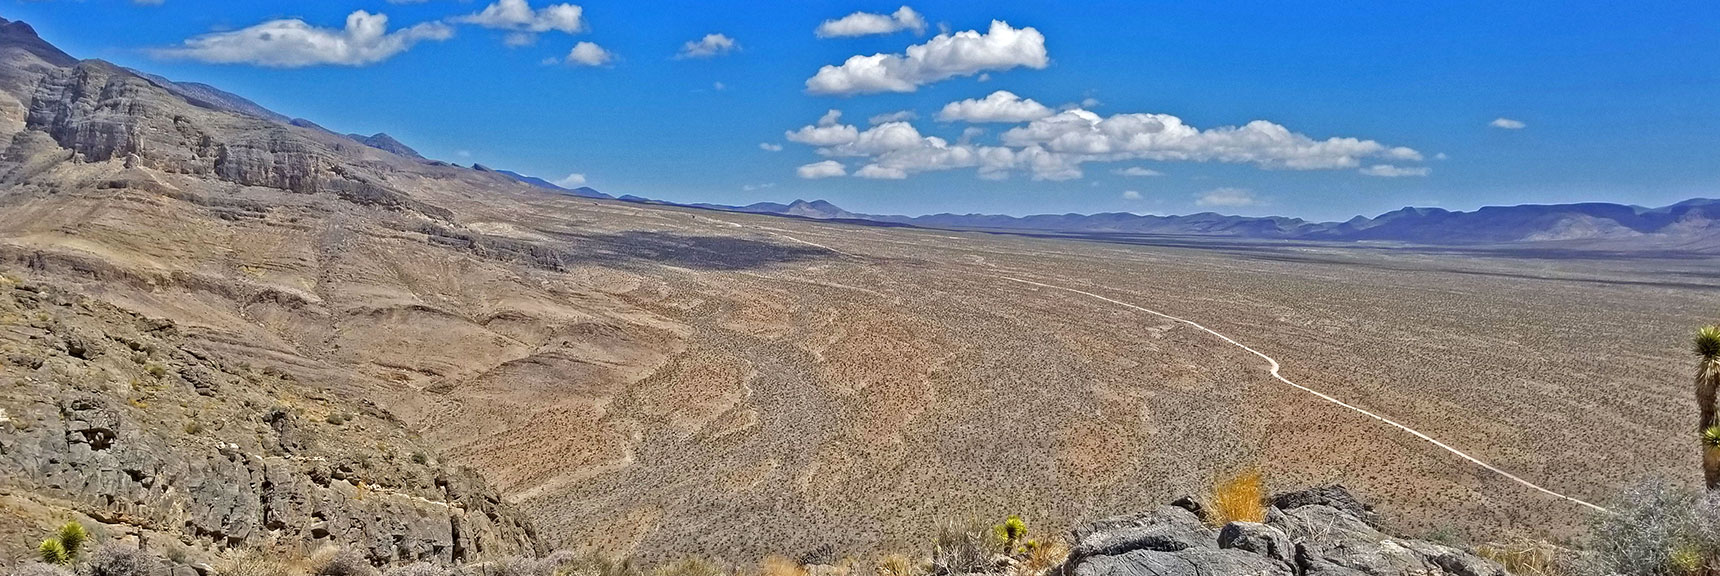 View Along Eastern Edge of the Sheep Range from Fossil Ridge Summit | Fossil Ridge End to End | Sheep Range | Desert National Wildlife Refuge, Nevada